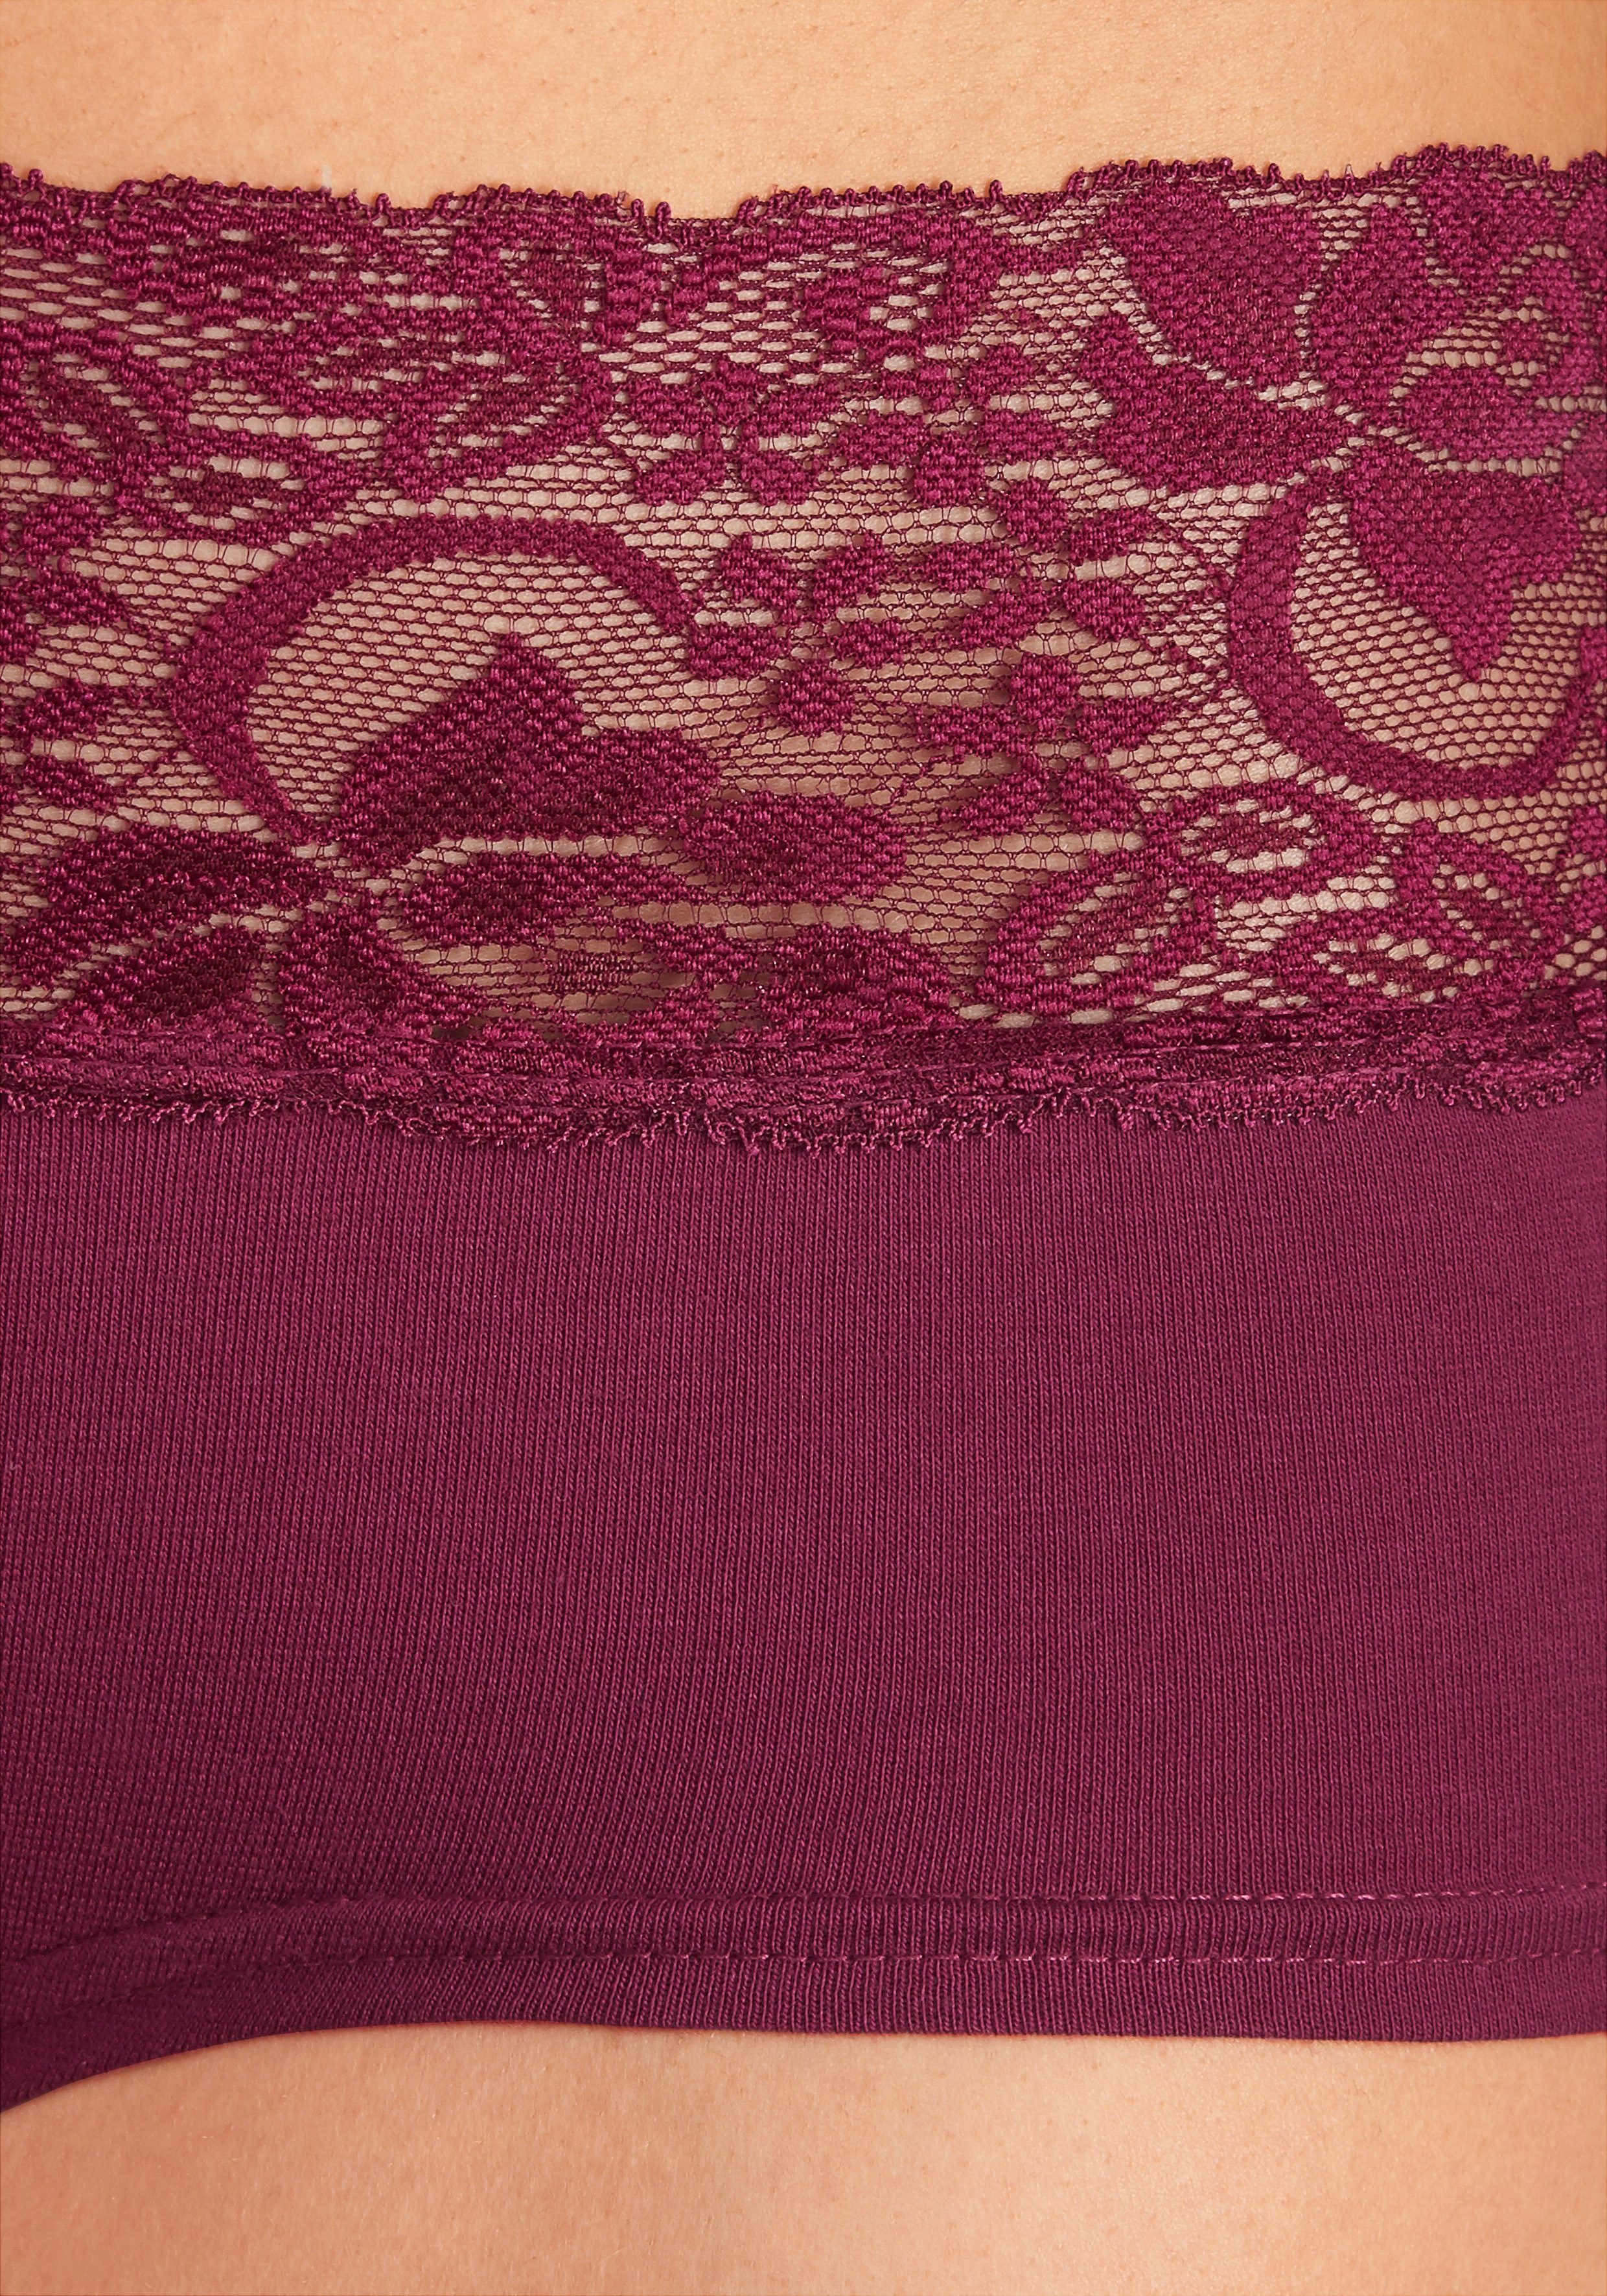 Vivance bordeaux Panty Baumwolle mit (Packung, 3-St) petrol, floraler Spitze elastischer taupe, aus